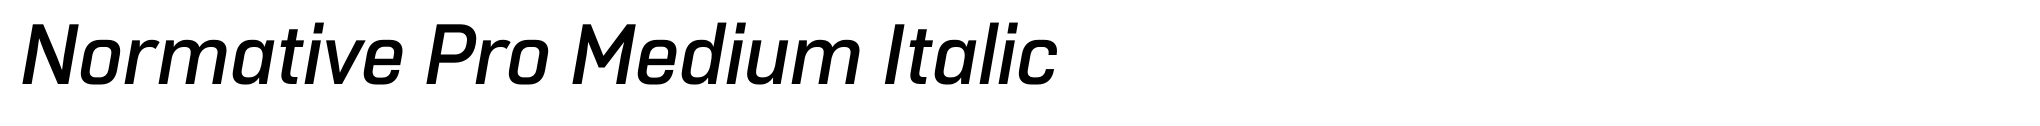 Normative Pro Medium Italic image